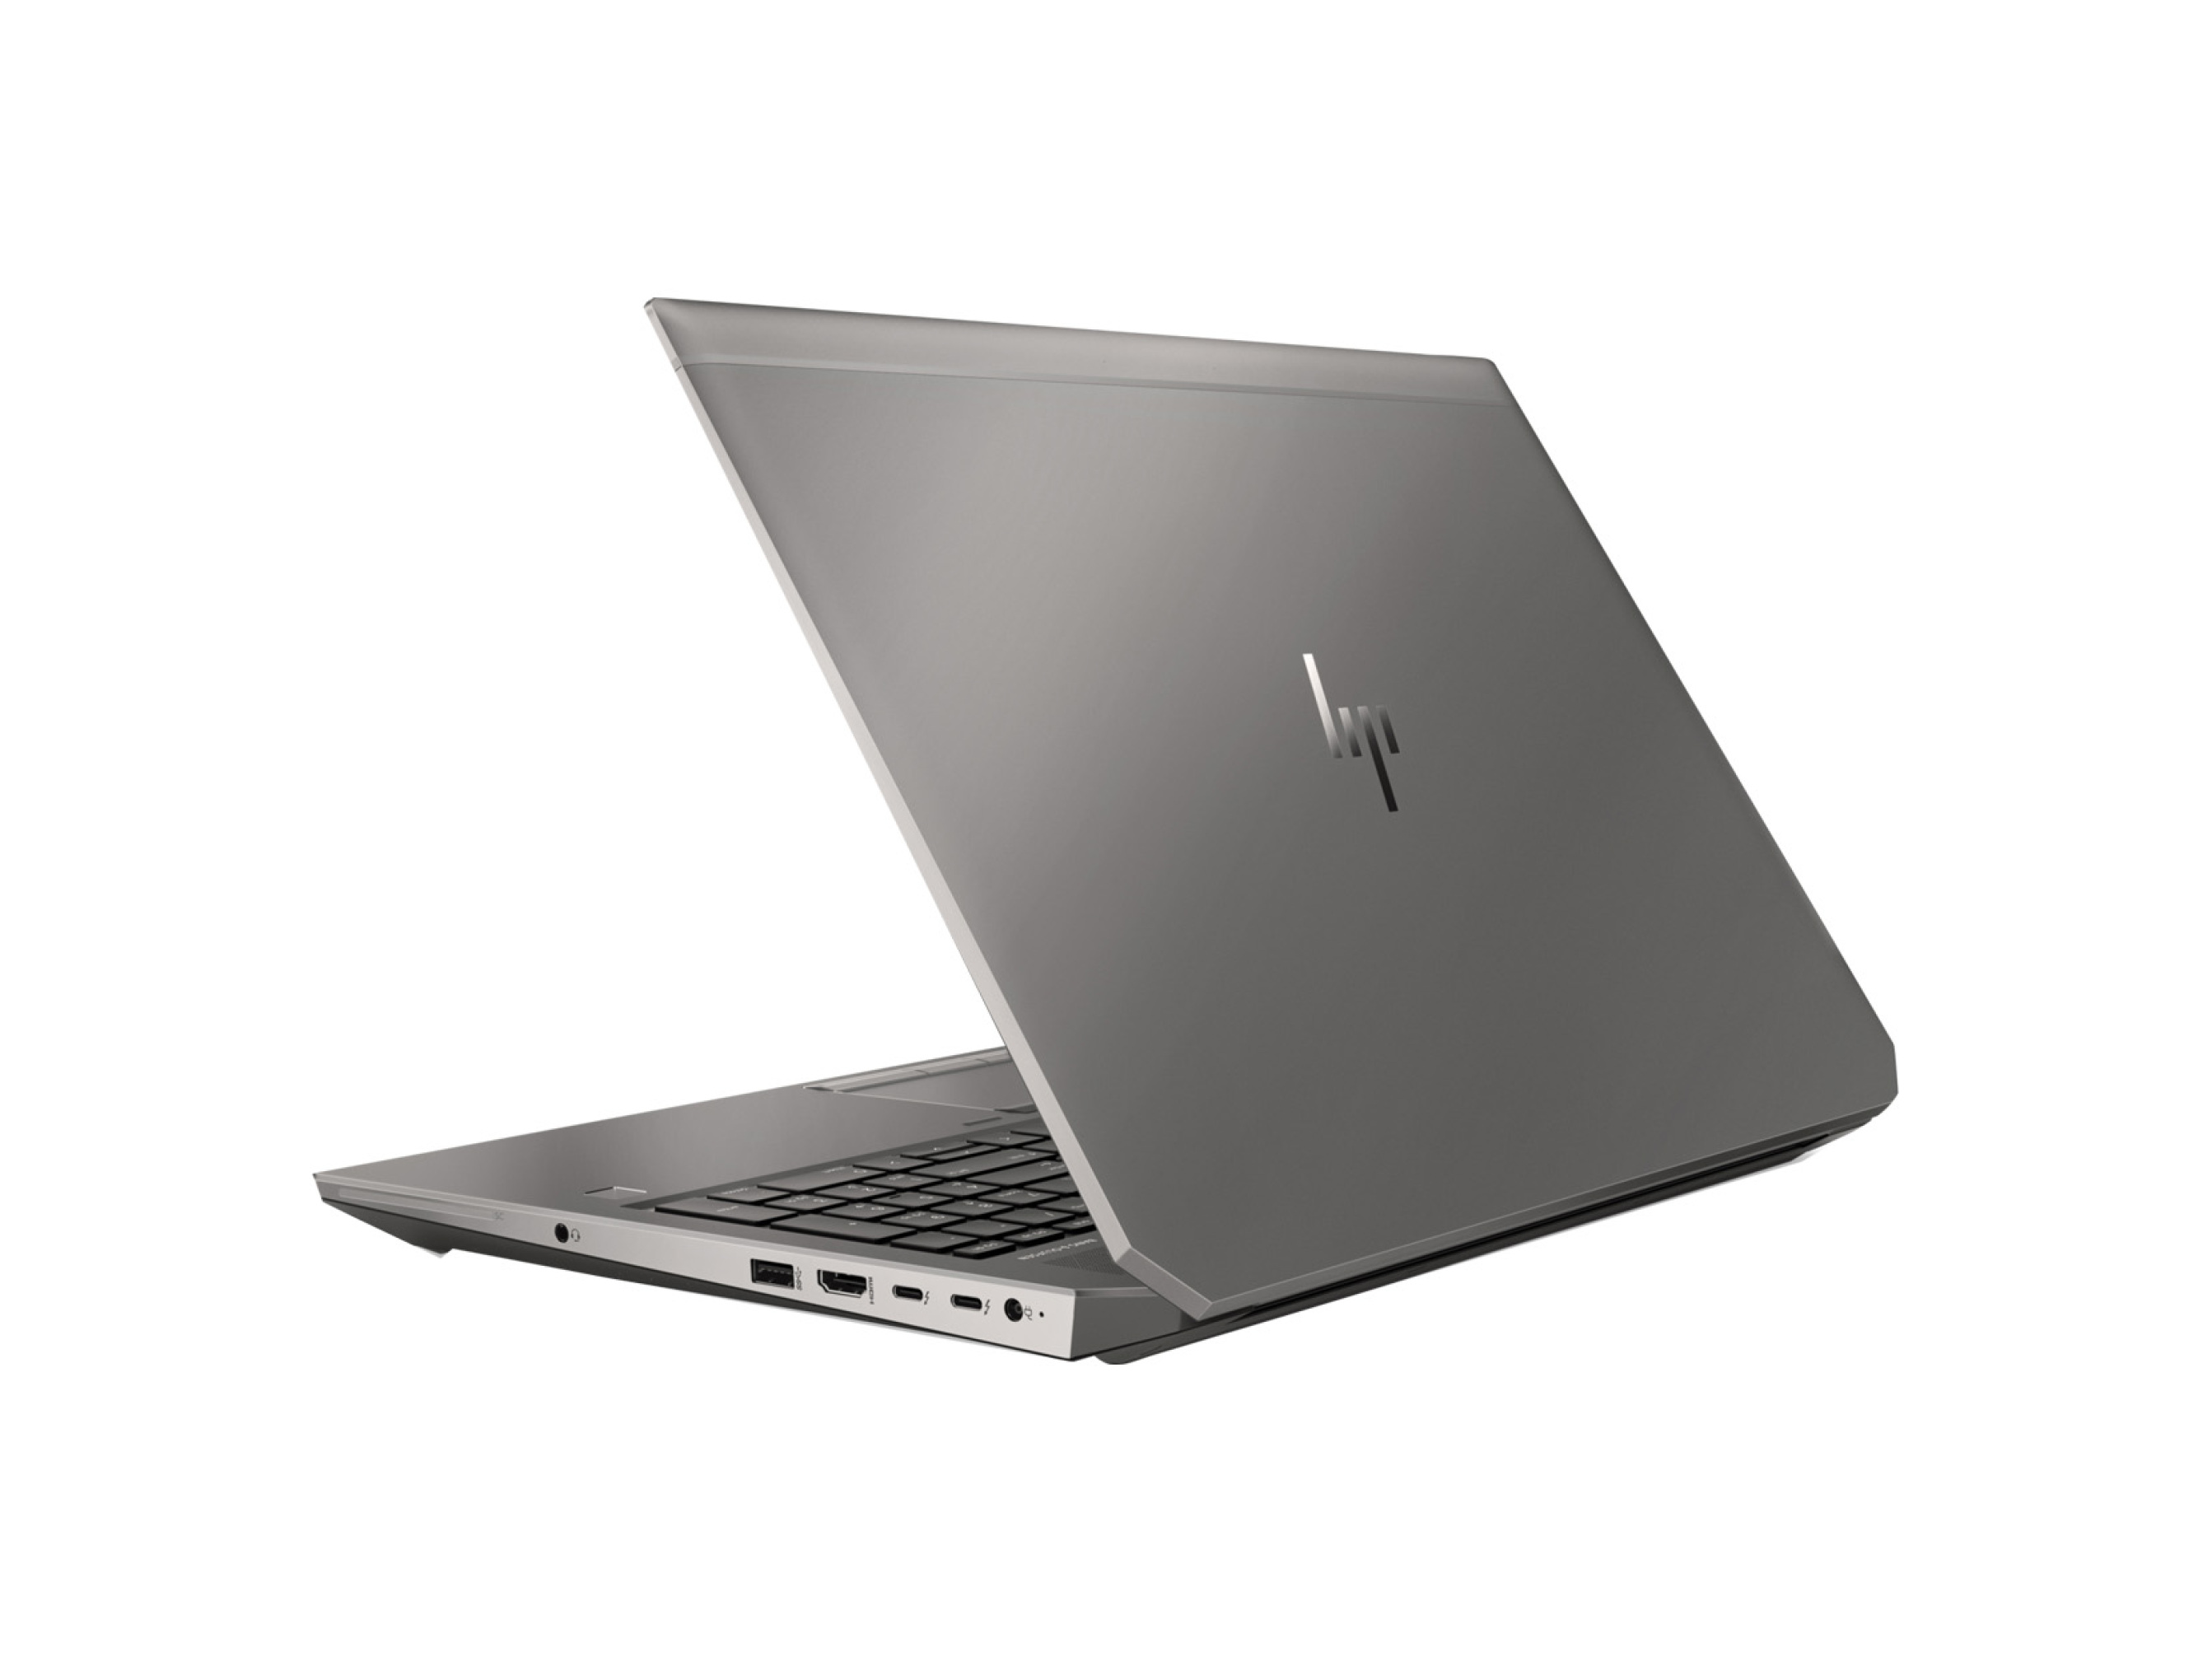  خرید و قیمت لپ تاپ اچ پی HP ZBook 15 G5 i7 8850H | لاکچری لپ تاپ 